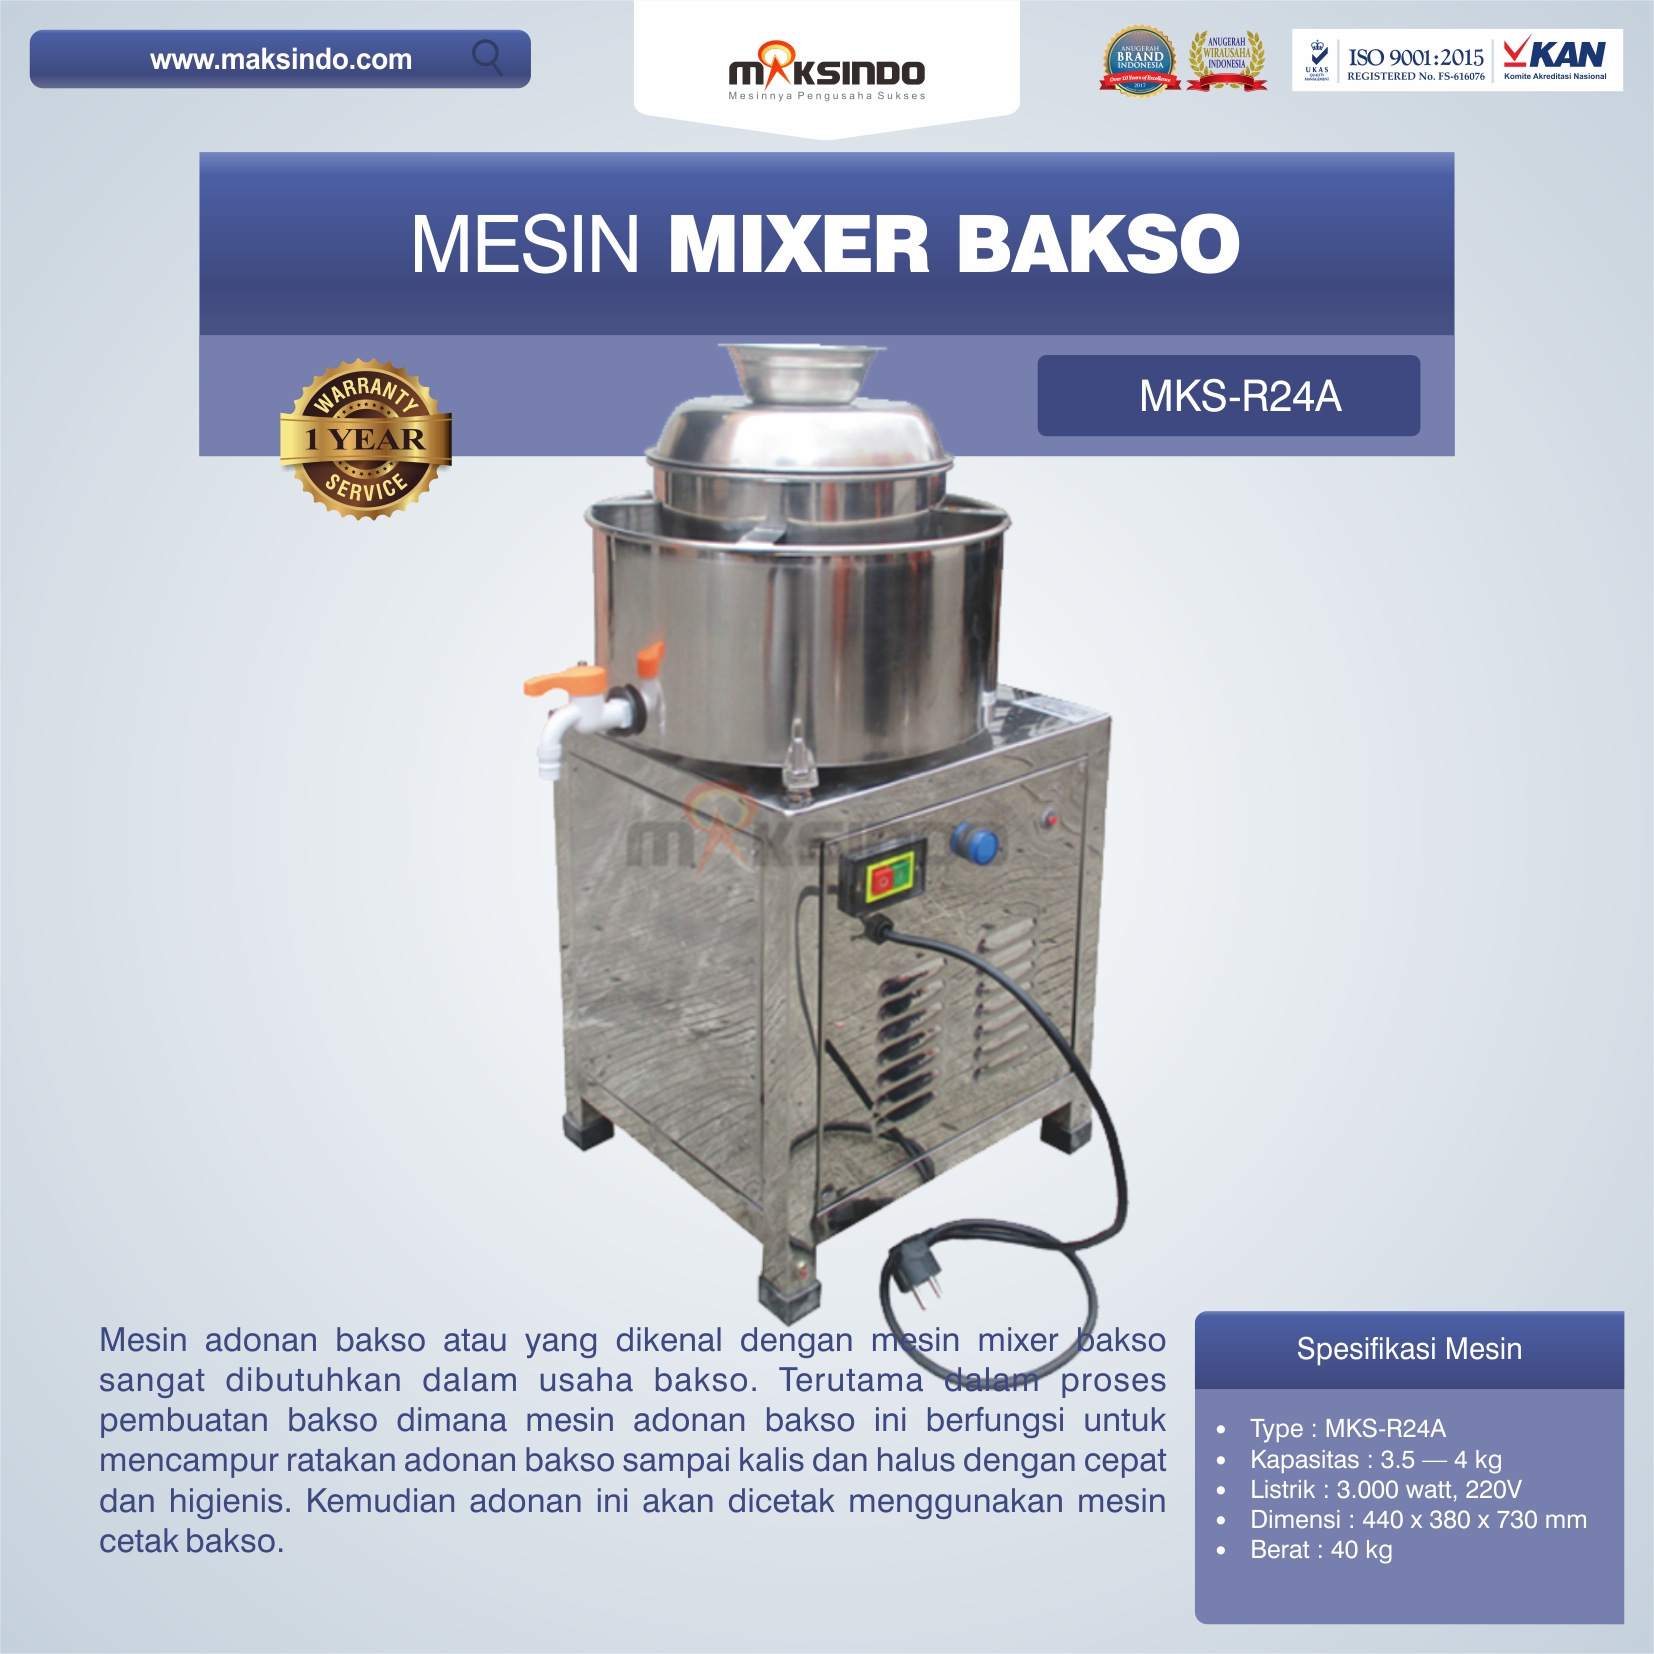 Jual Mesin Mixer Bakso MKS-R24A di Banjarmasin